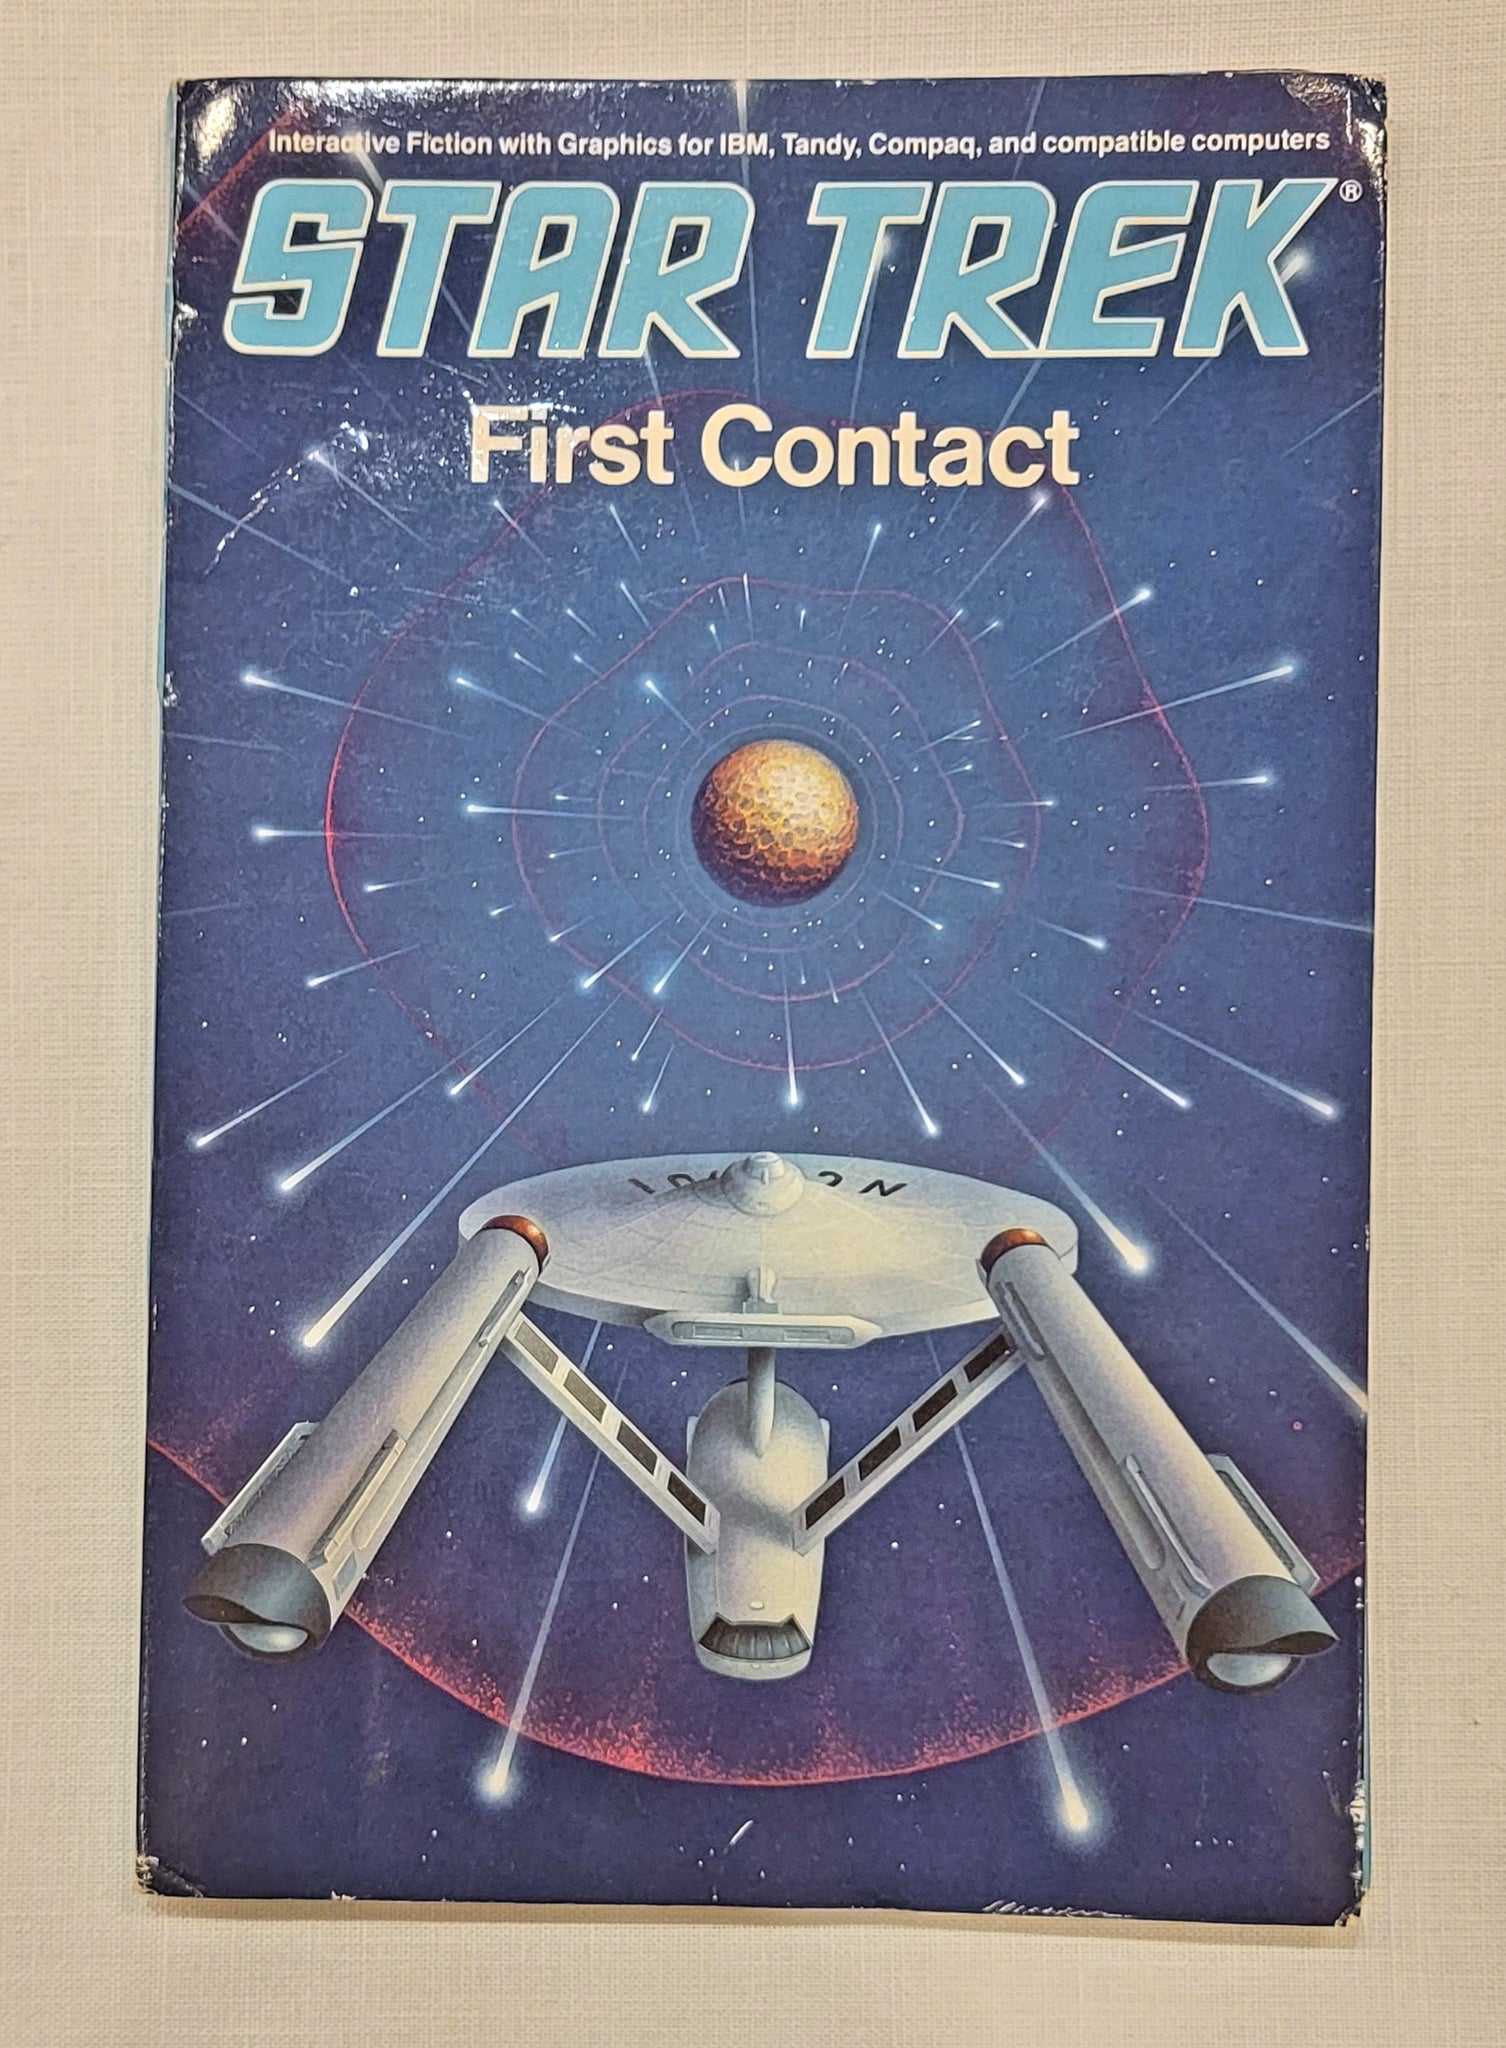 1988 IBM Star Trek First Contact Interactive Computer Game